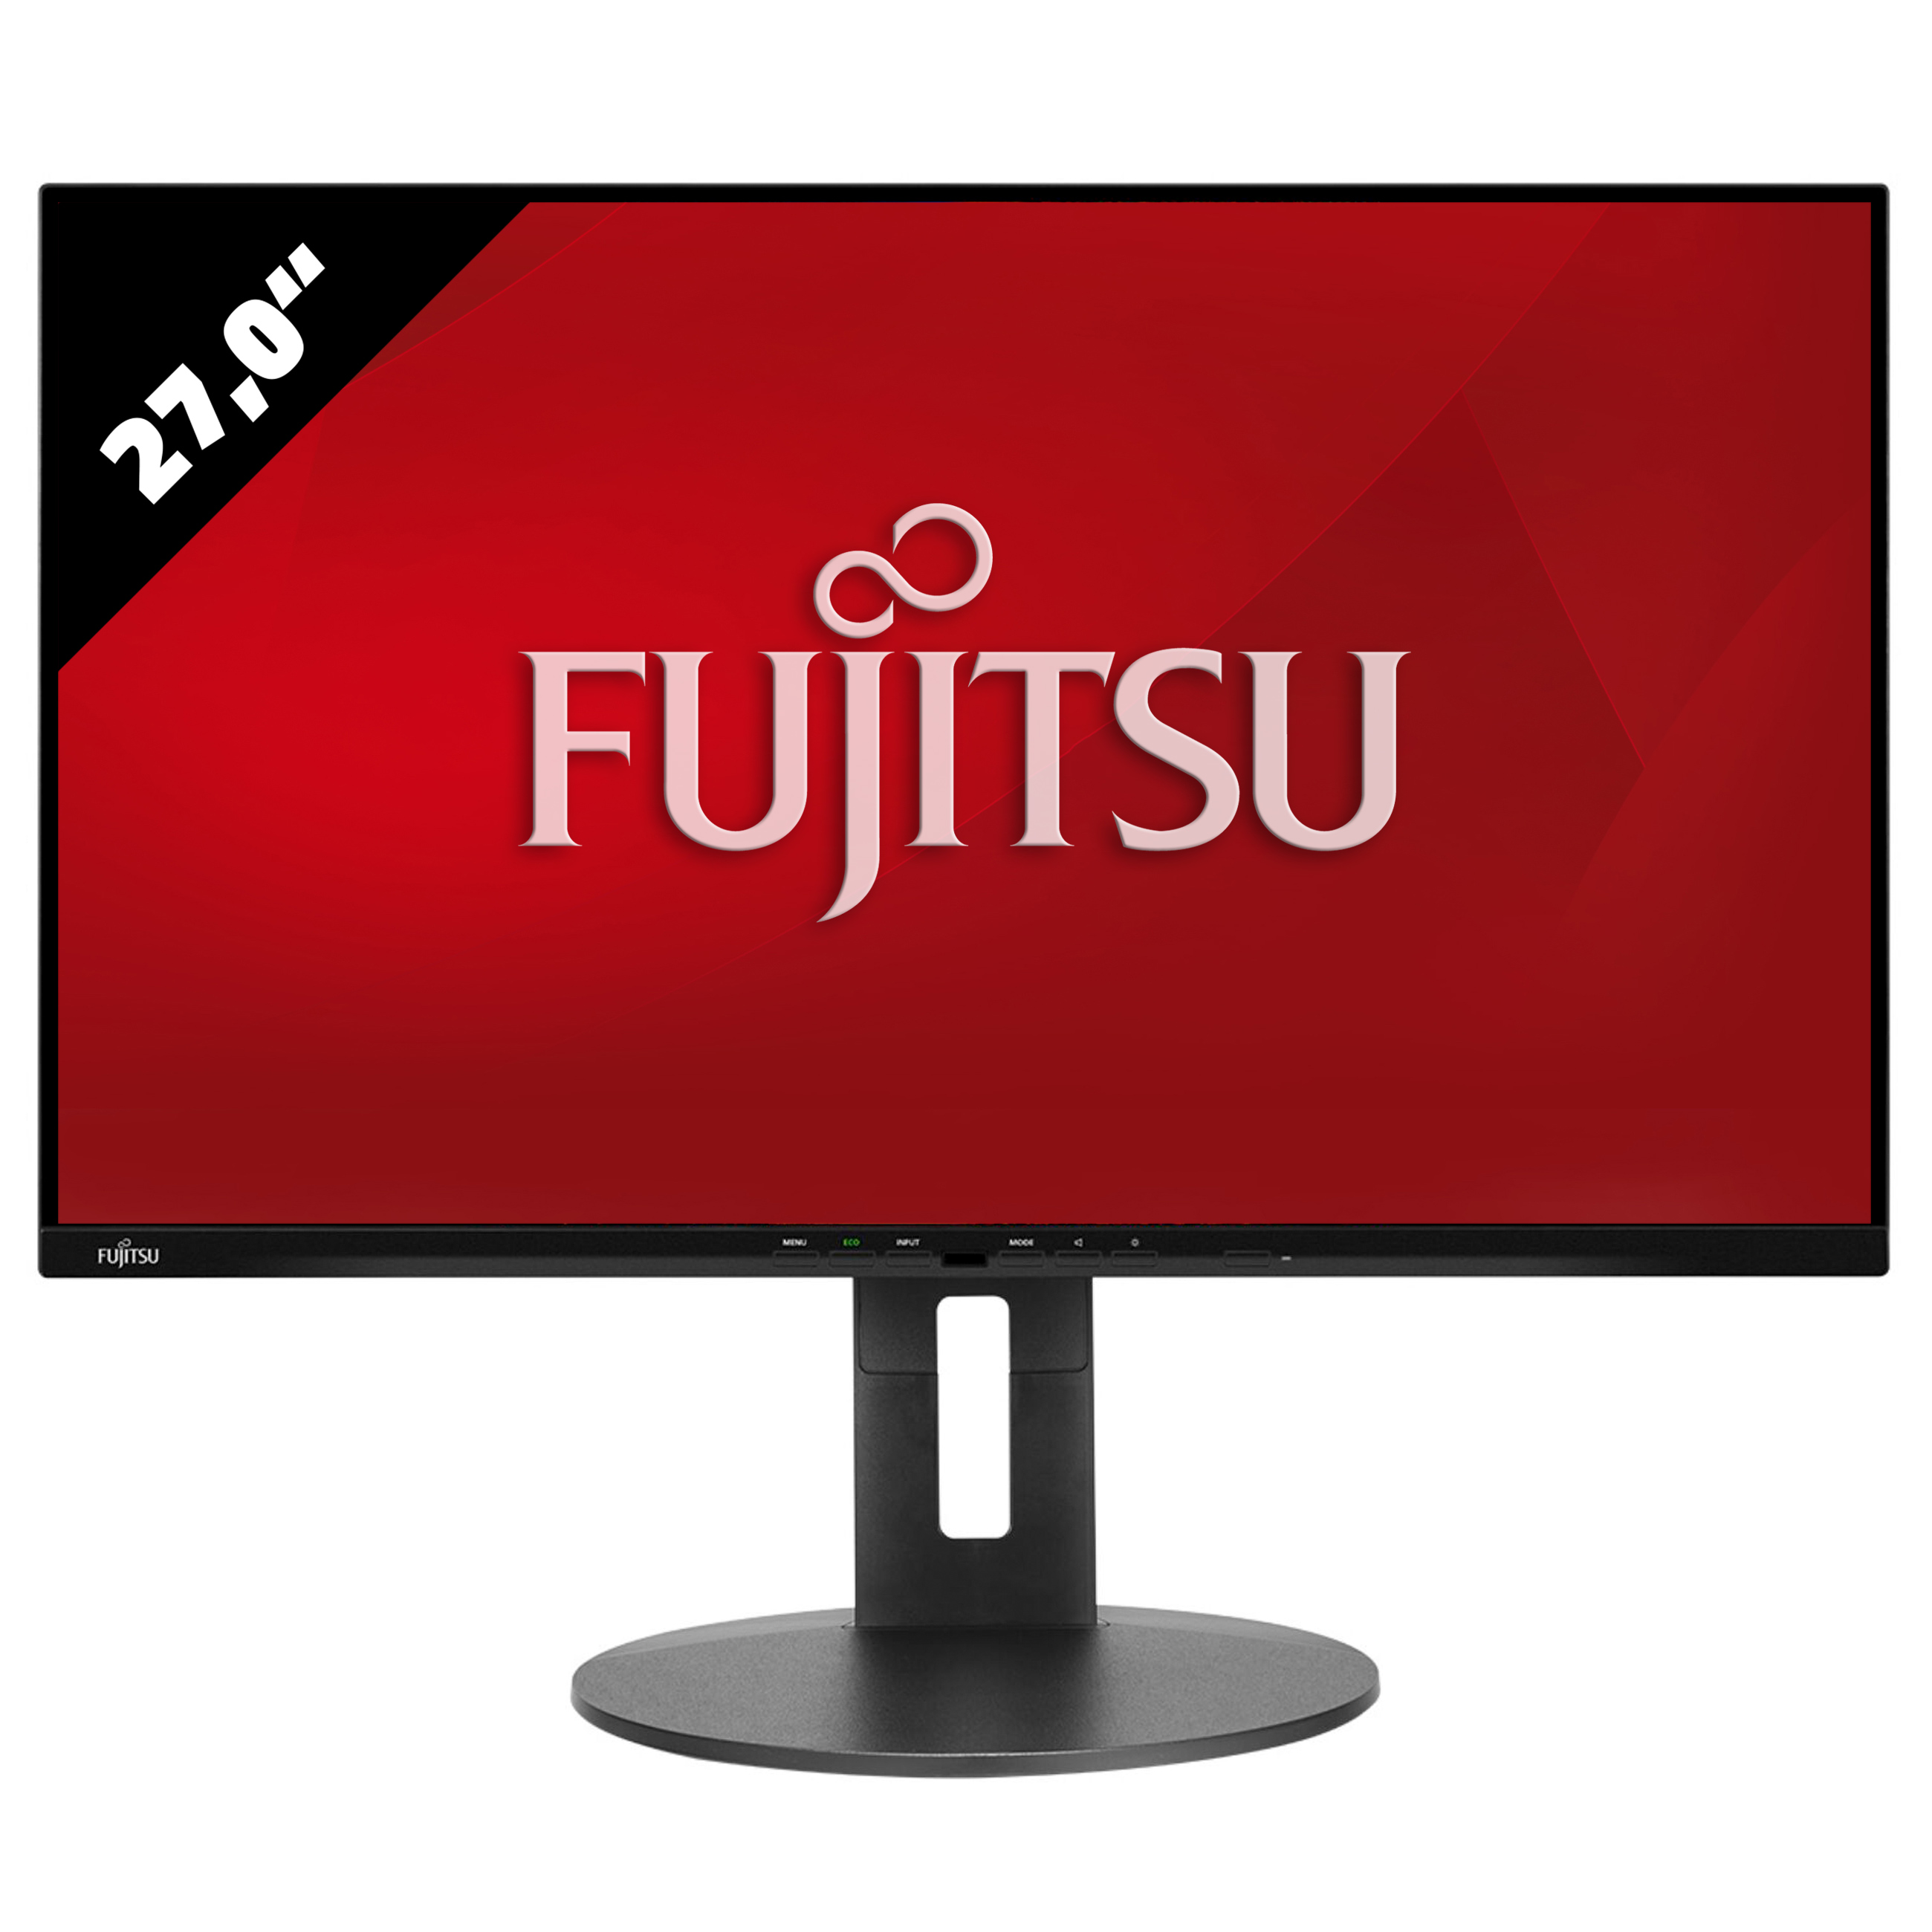 Fujitsu Display P27-9 - 2560 x 1440 - WQHD